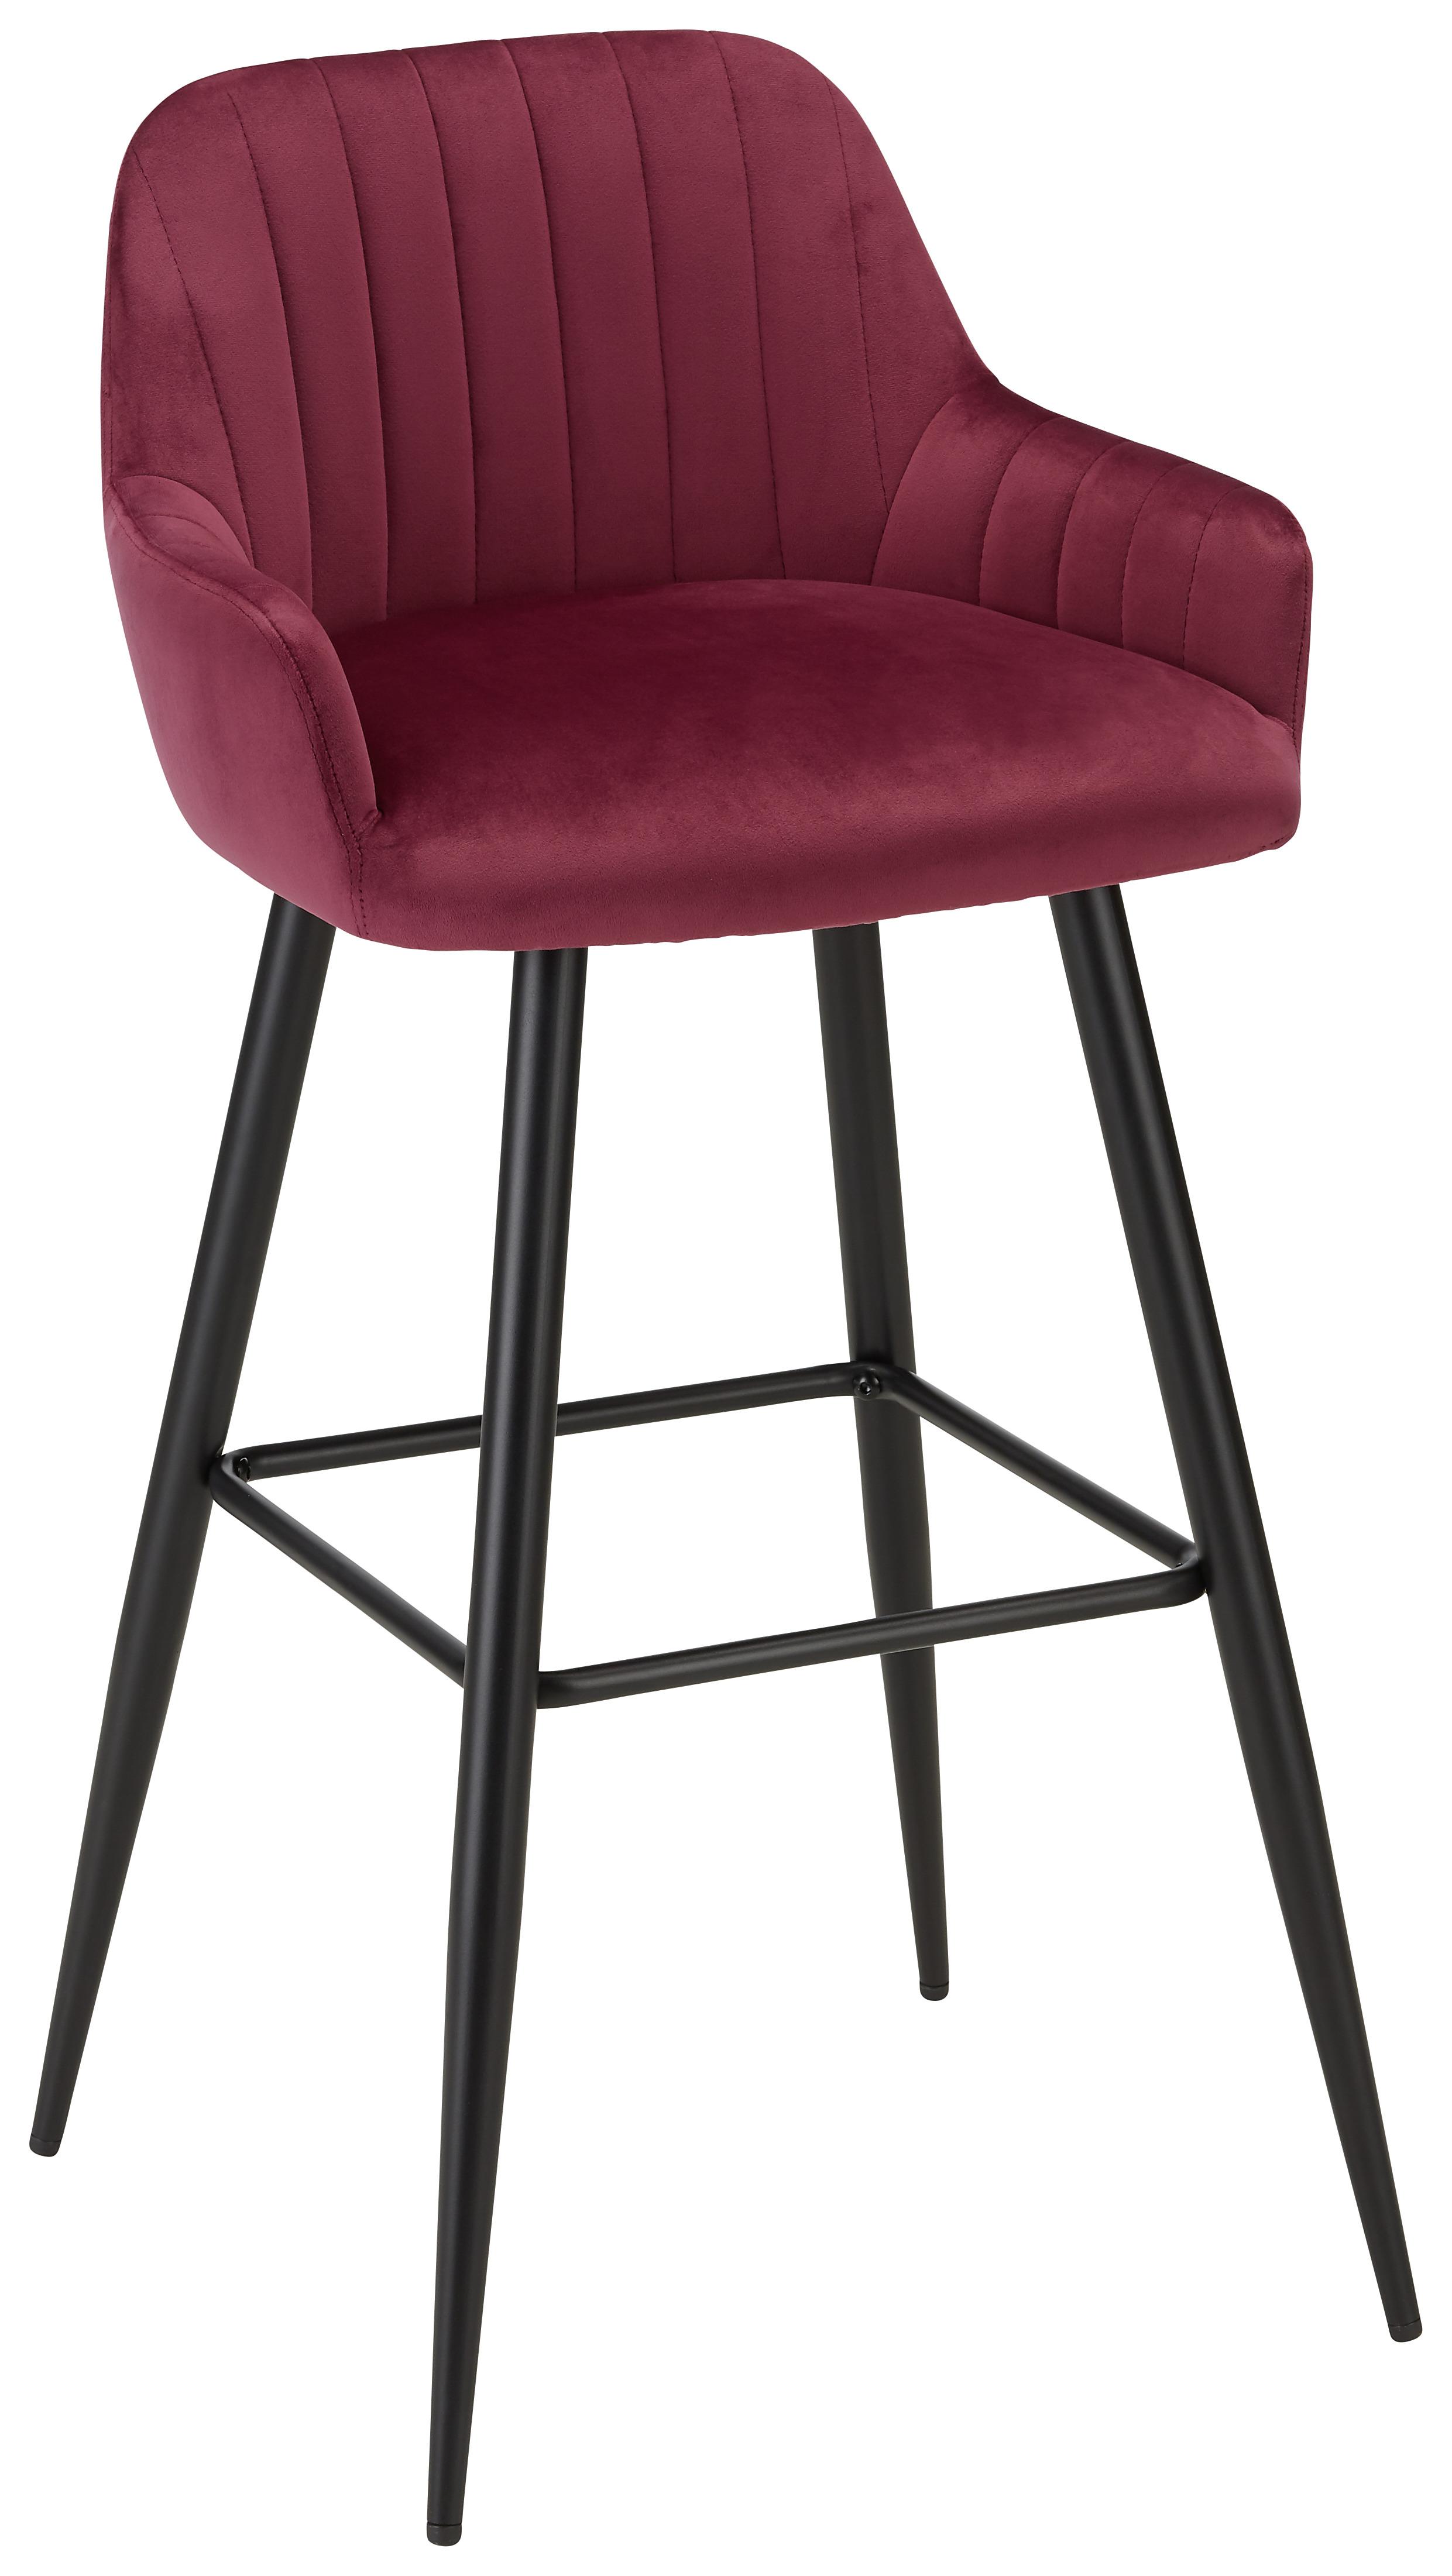 Barová Židle Martha - magenta/černá, Moderní, kov/textil (50/99/53,5cm) - Modern Living